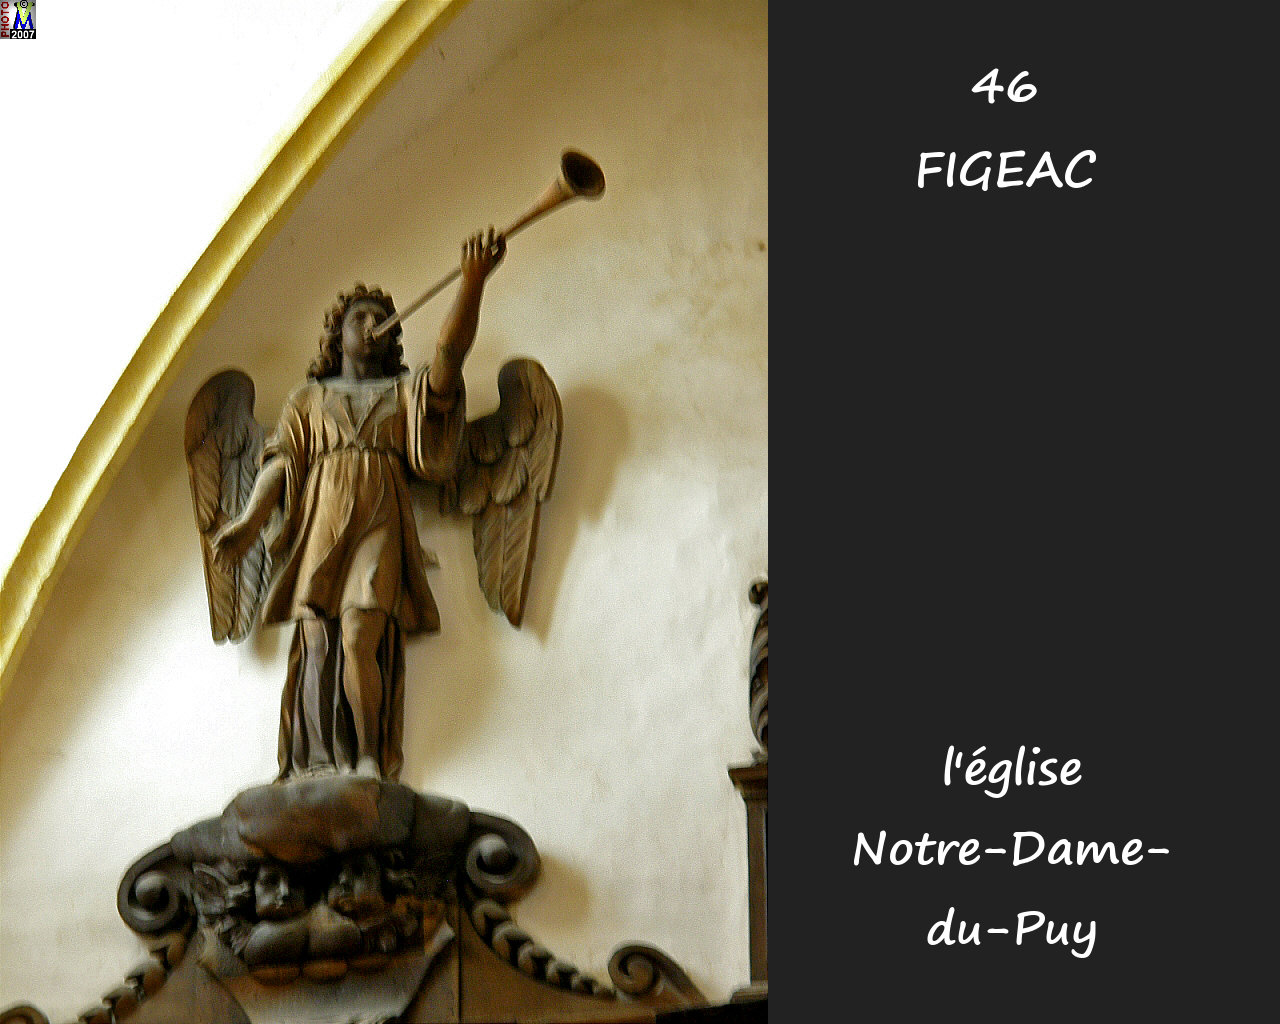 46FIGEAC_eglise-puy_224.jpg